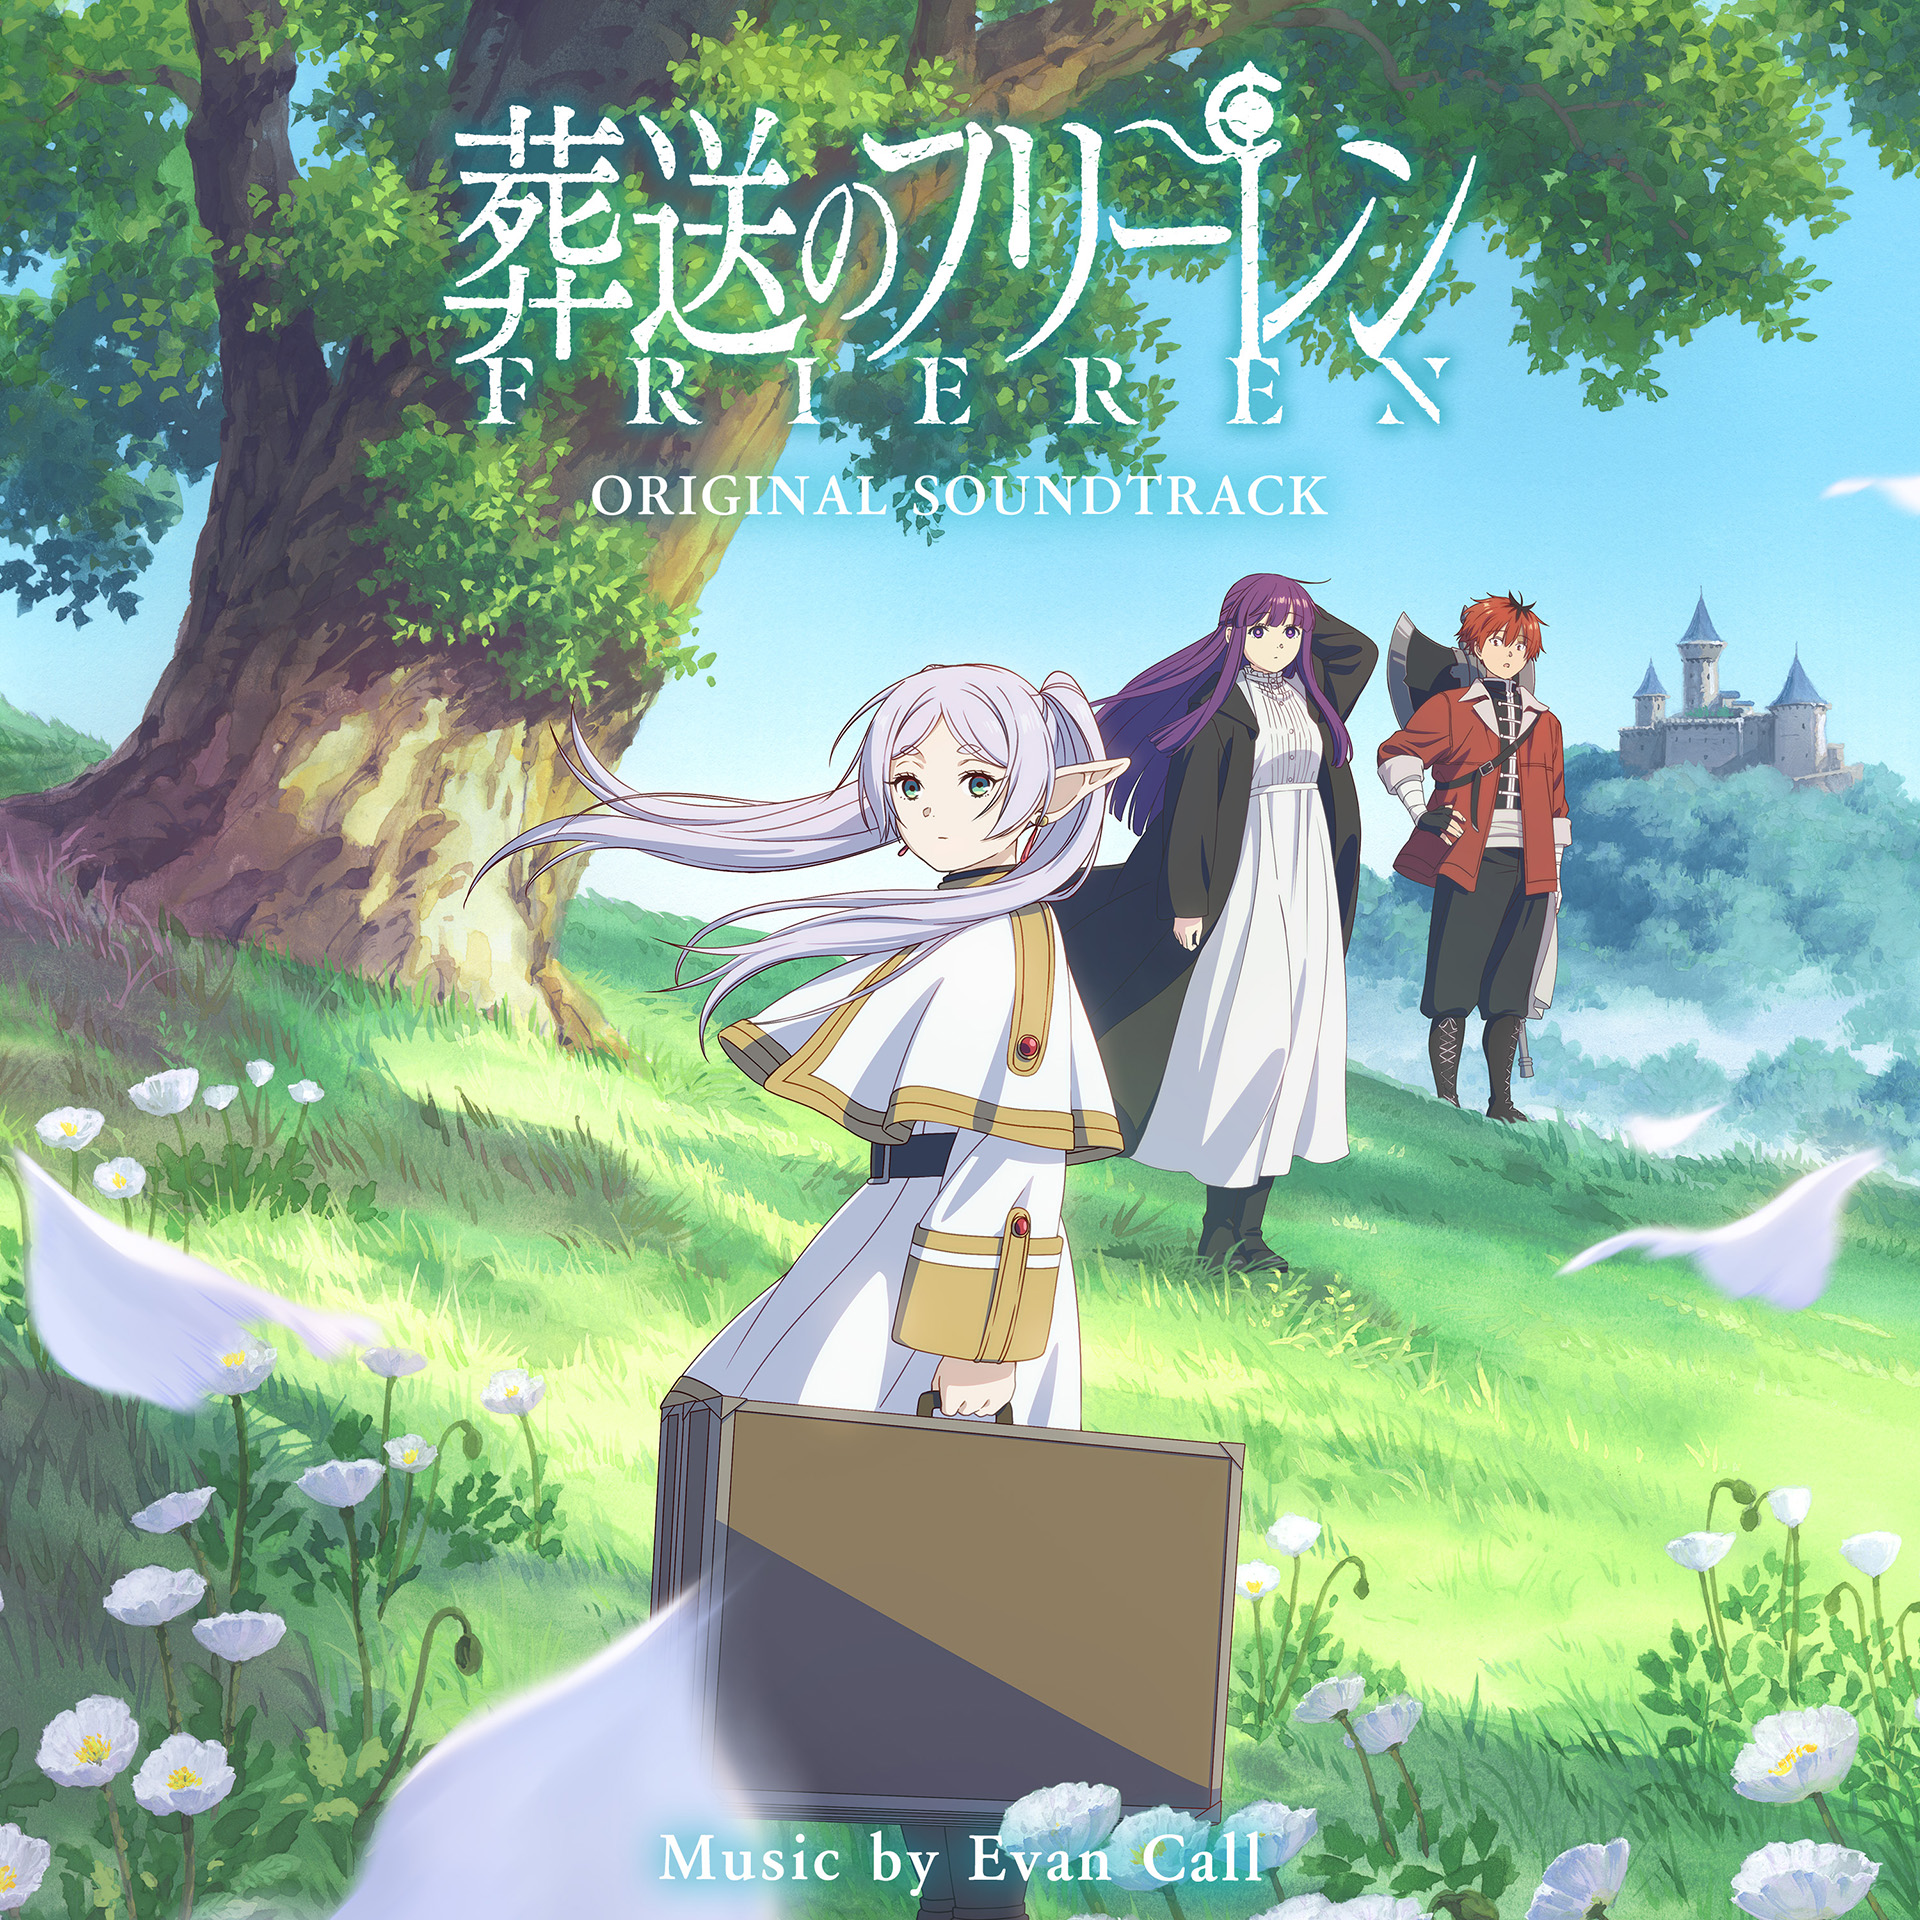 TVアニメ「葬送のフリーレン」オリジナルサウンドトラックが4月17日に発売決定 - GAME Watch